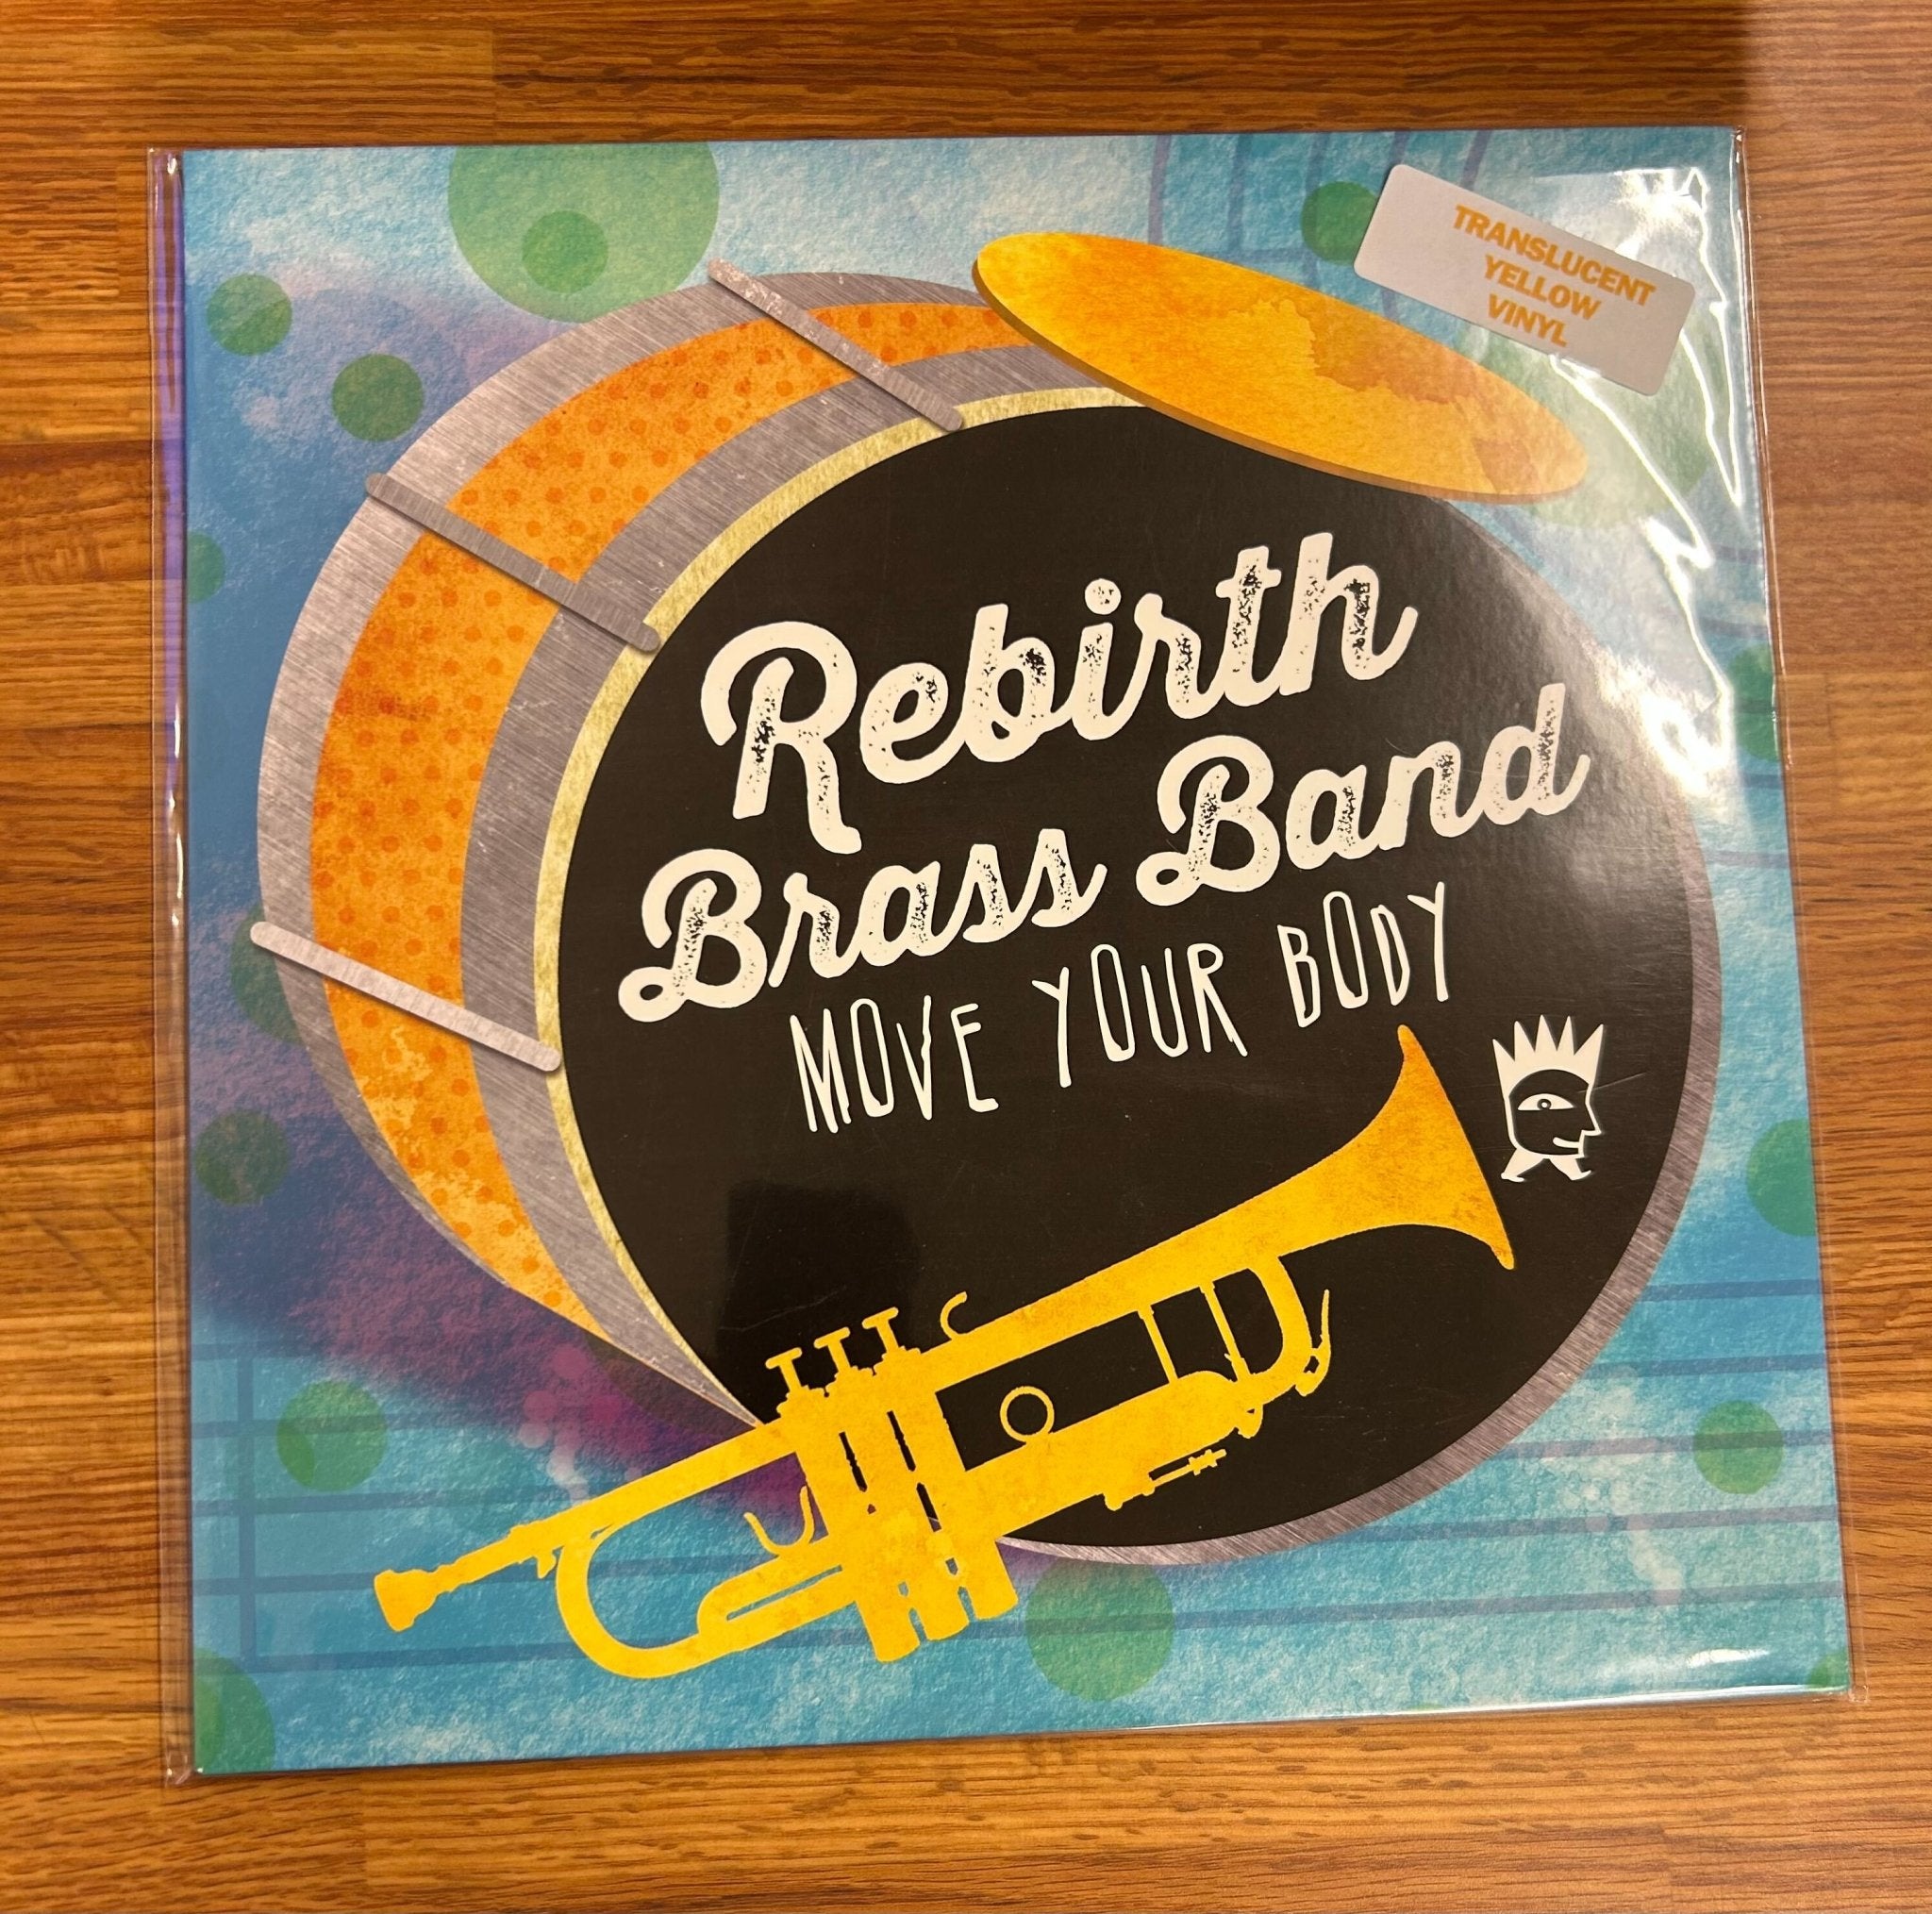 Rebirth Brass Band, Move Your Body - Dirty Coast Press